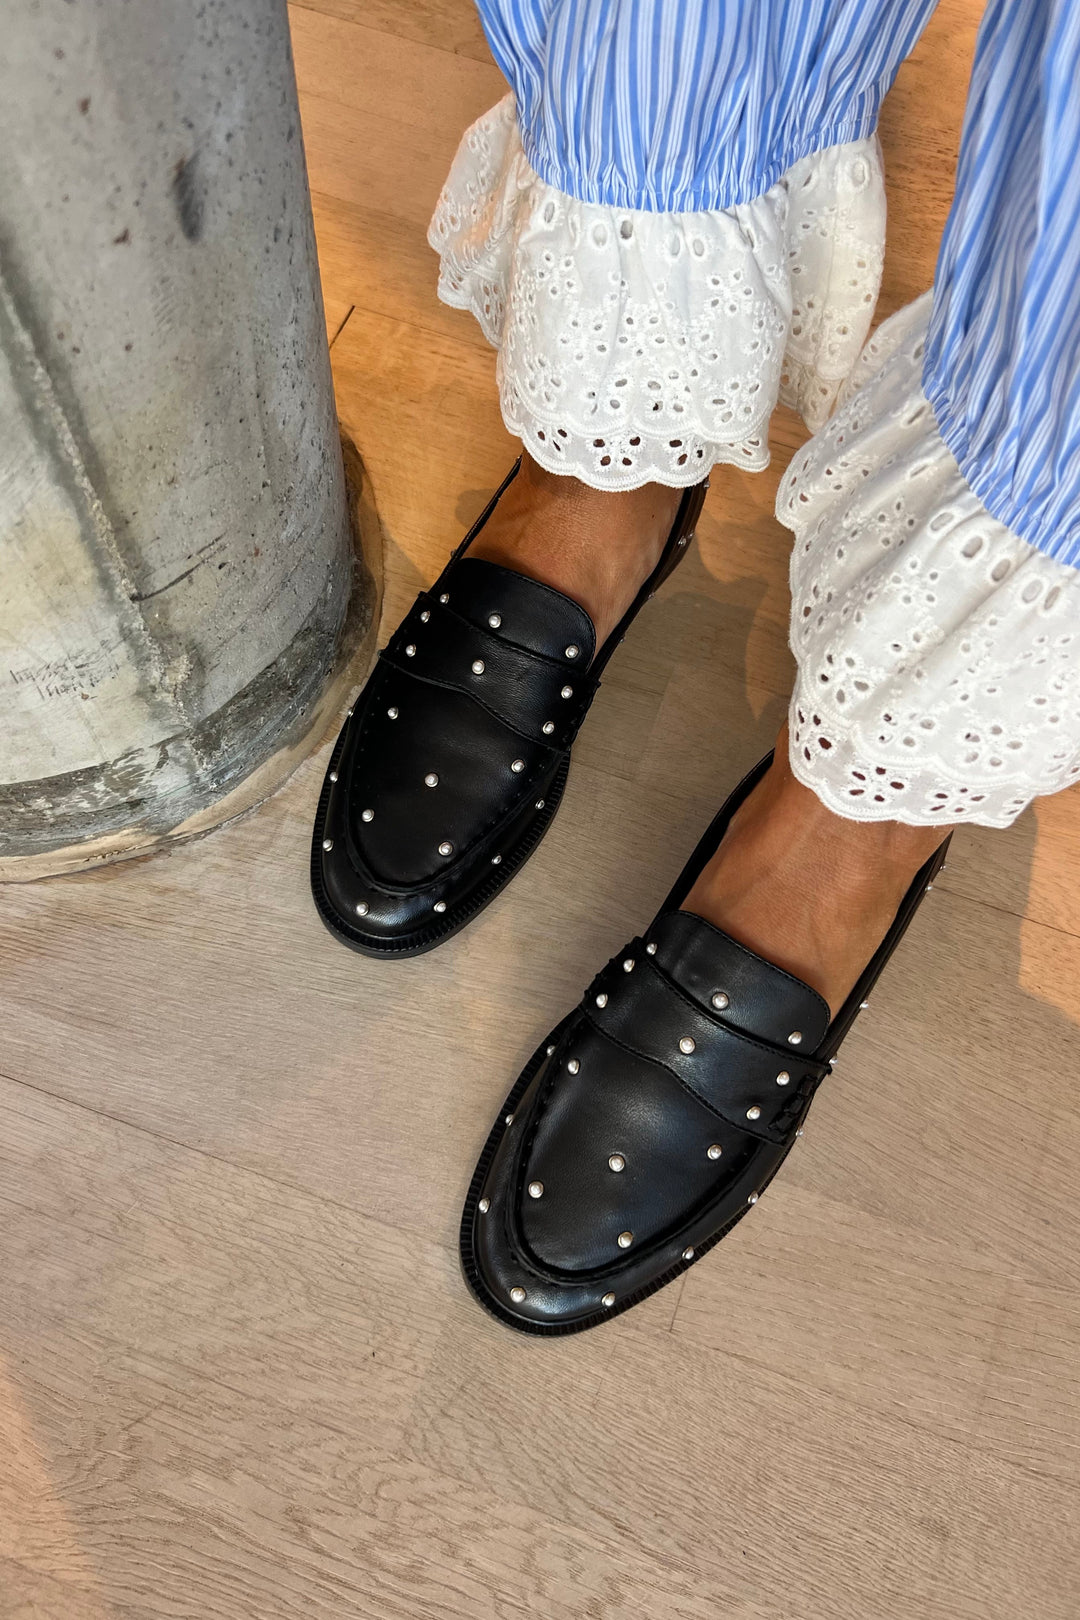 Copenhagen Shoes - The Pearl Shoe - Black Loafers 